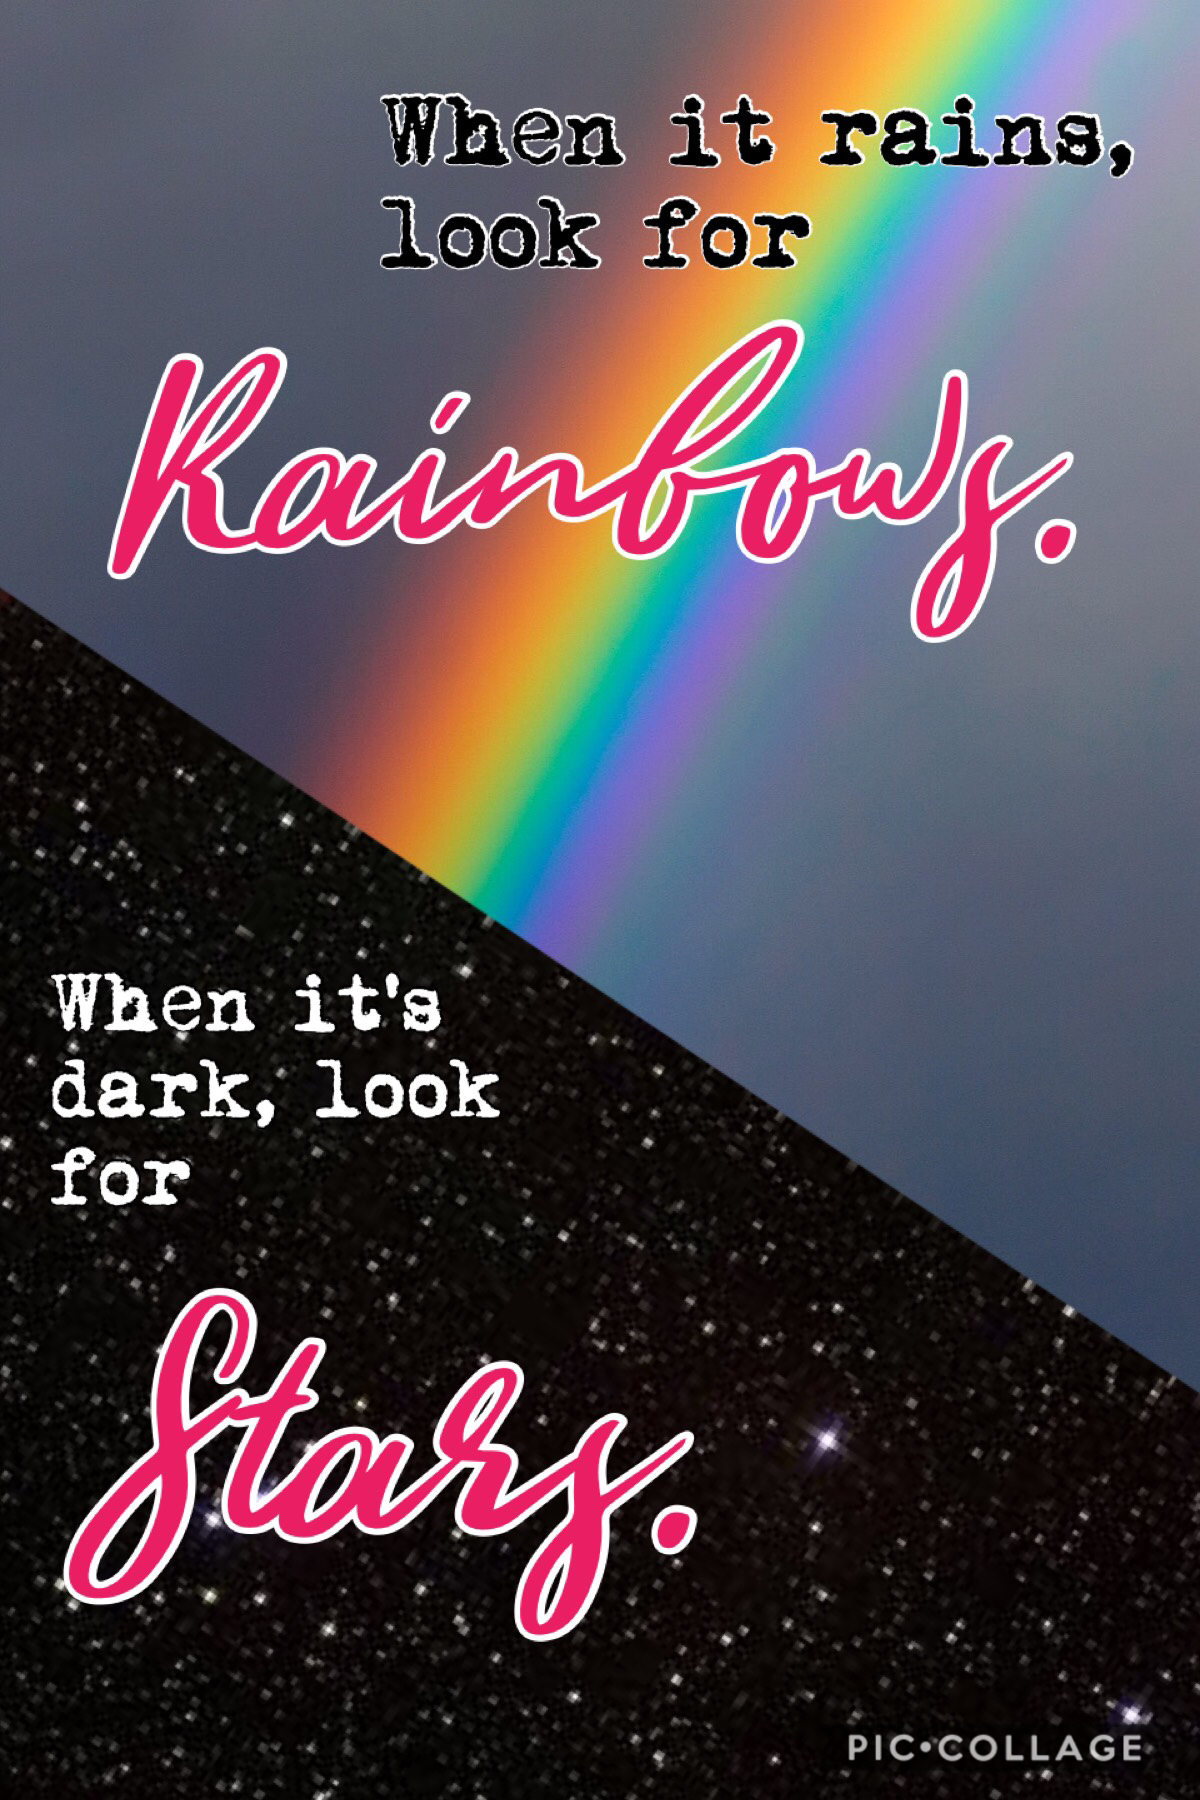 Rainbows & stars